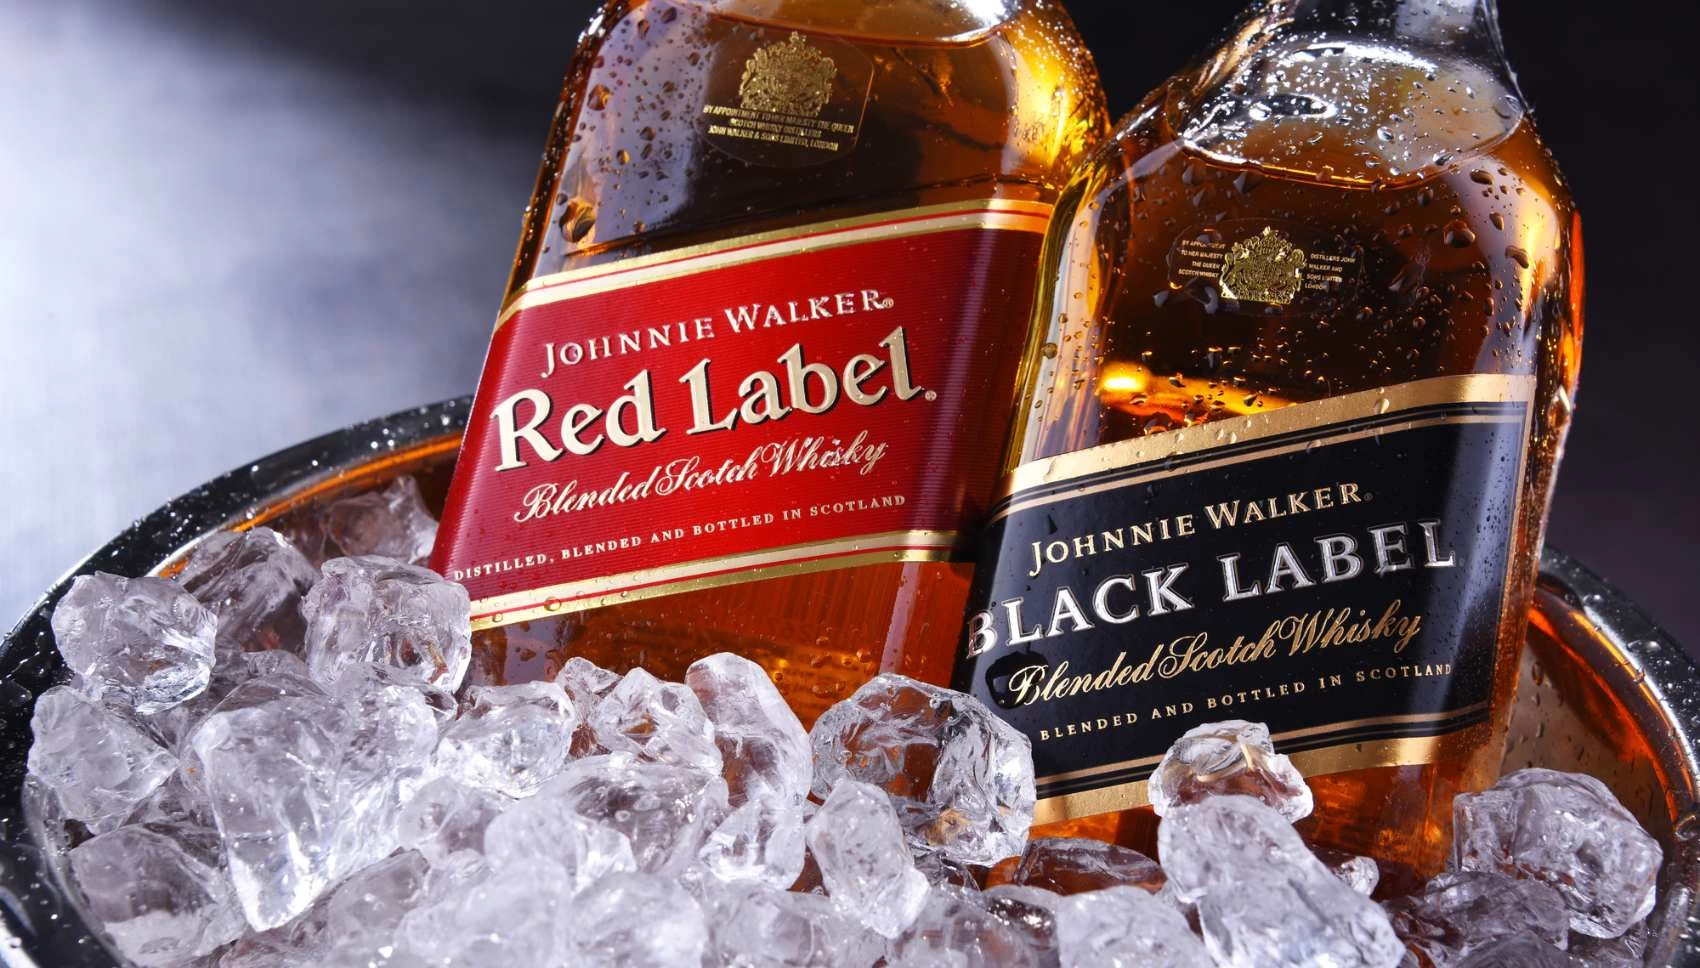 viski-johnnie-walker-red-label